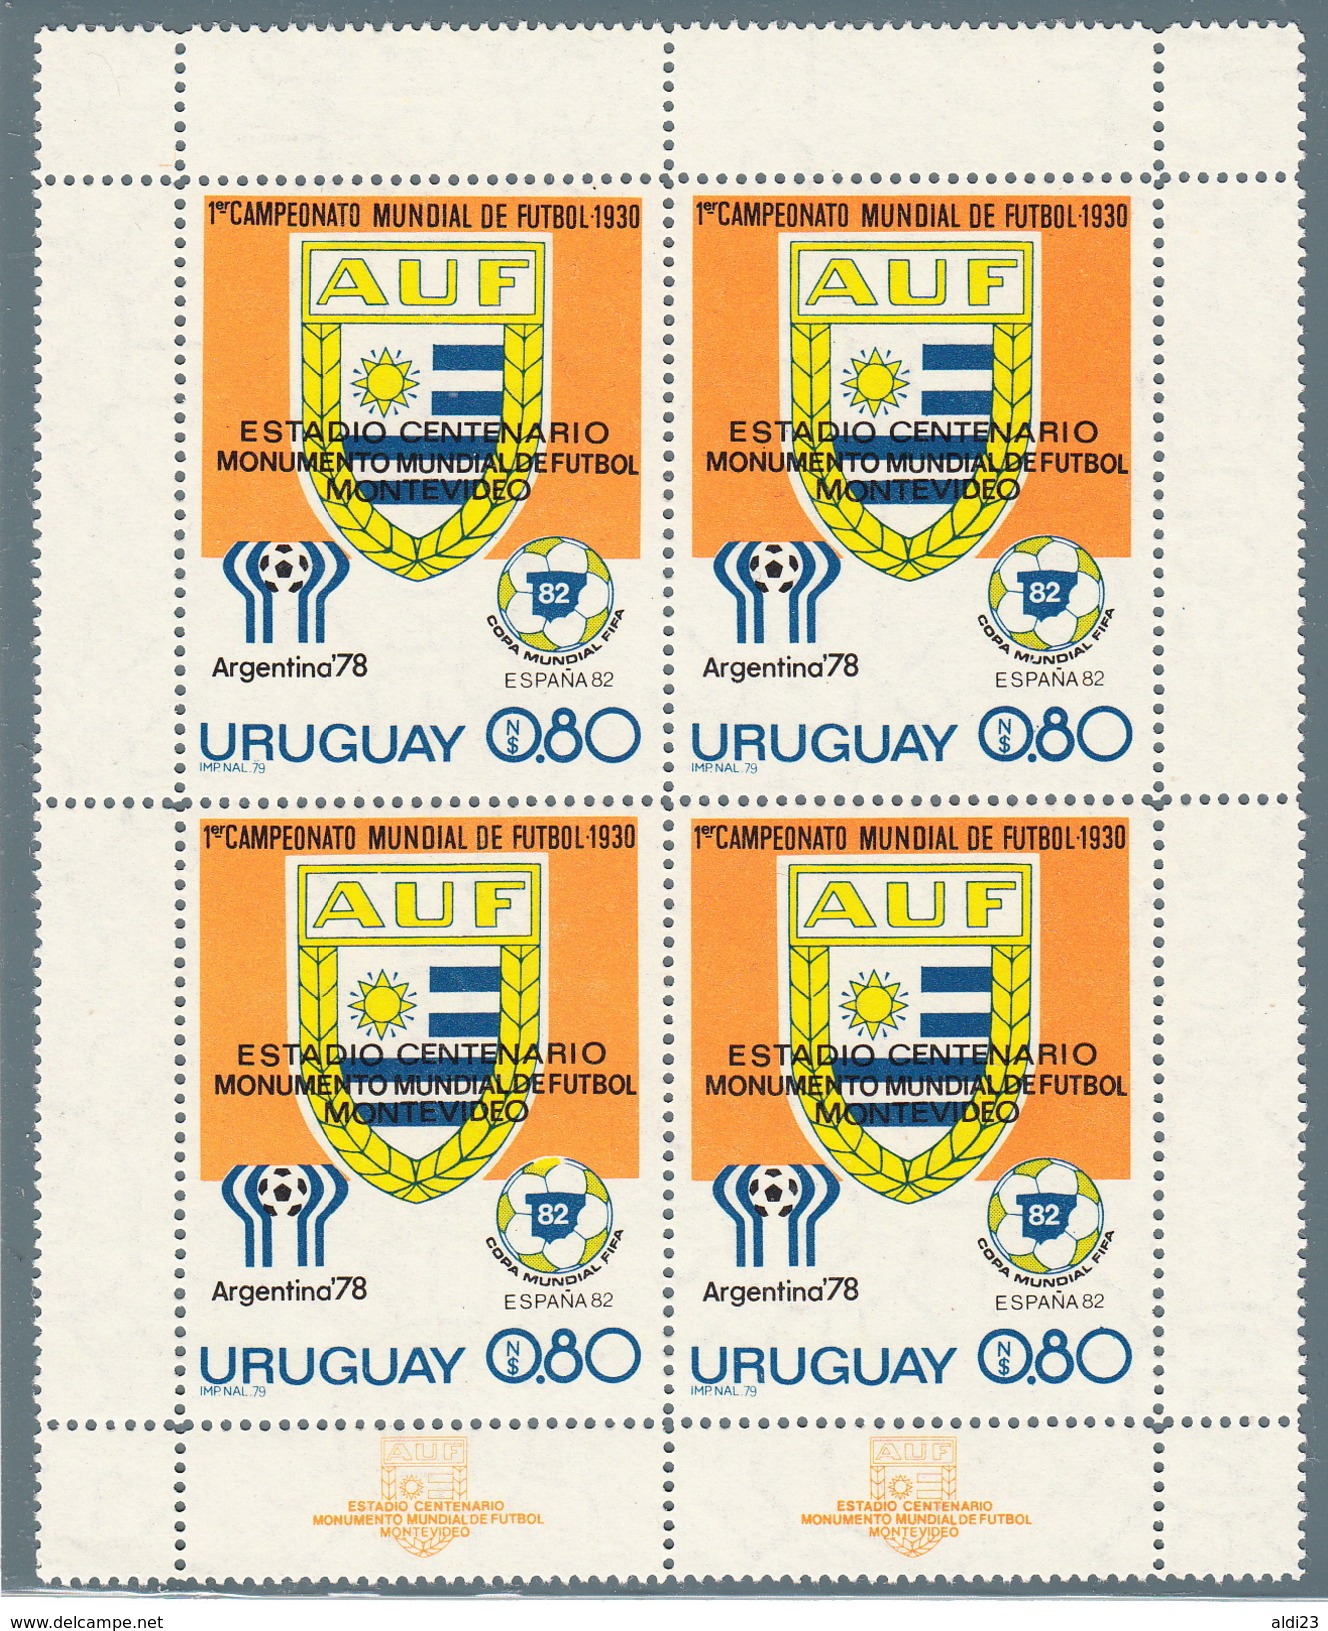 Soccer Stamps "Estadio Centenario - Monumento Mundial De Football". Beautiful World Cup New. - 1930 – Uruguay